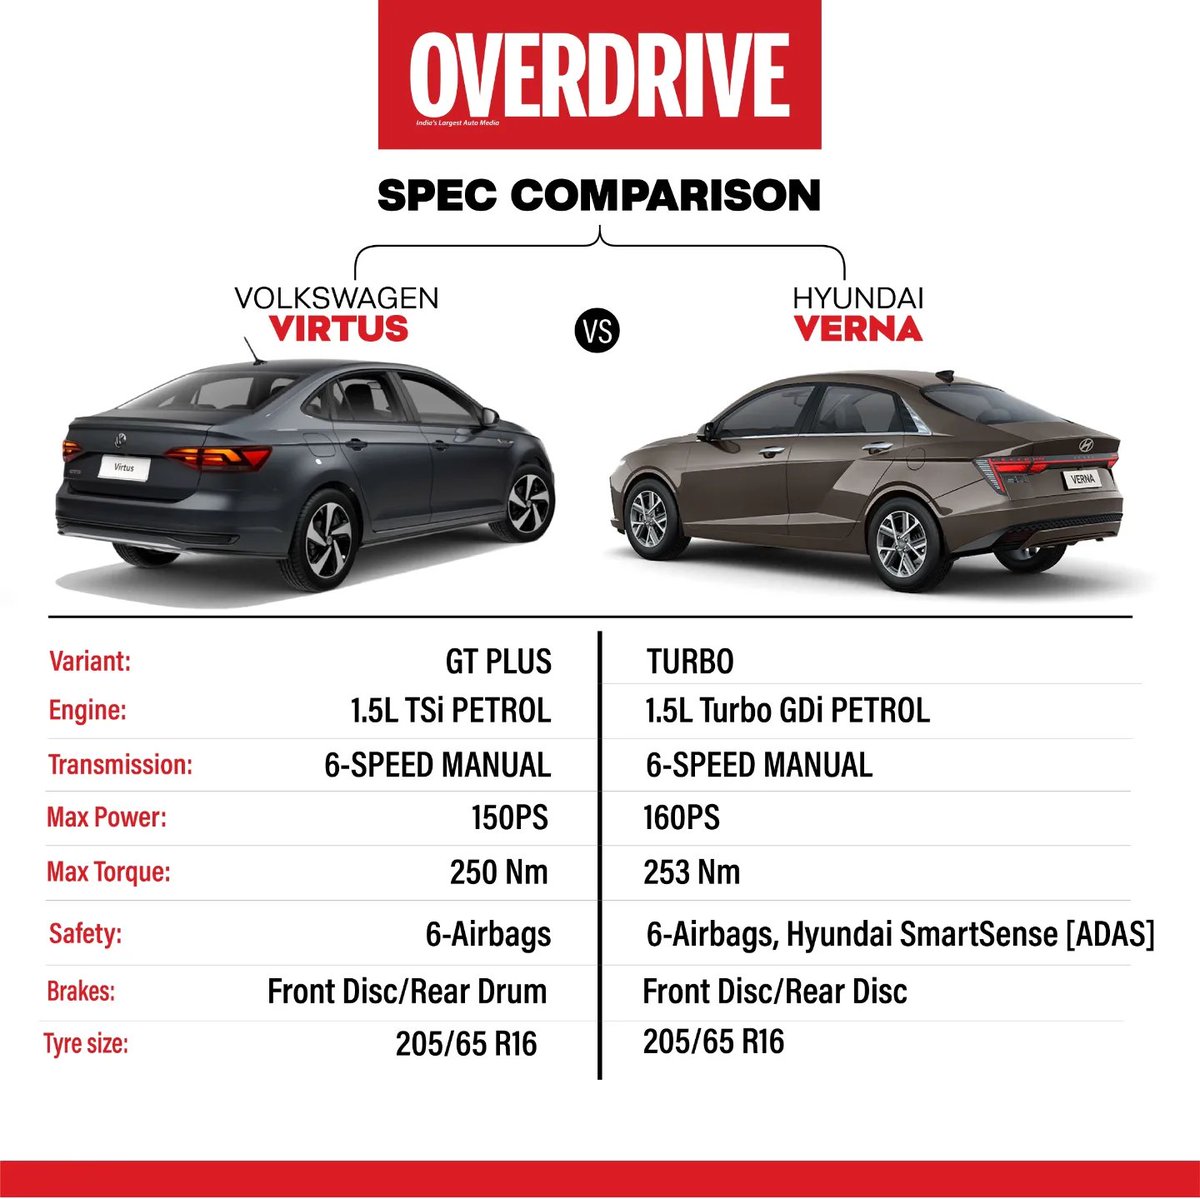 #speccomparison #turbo #manual #enthusiast #driverscar #performance